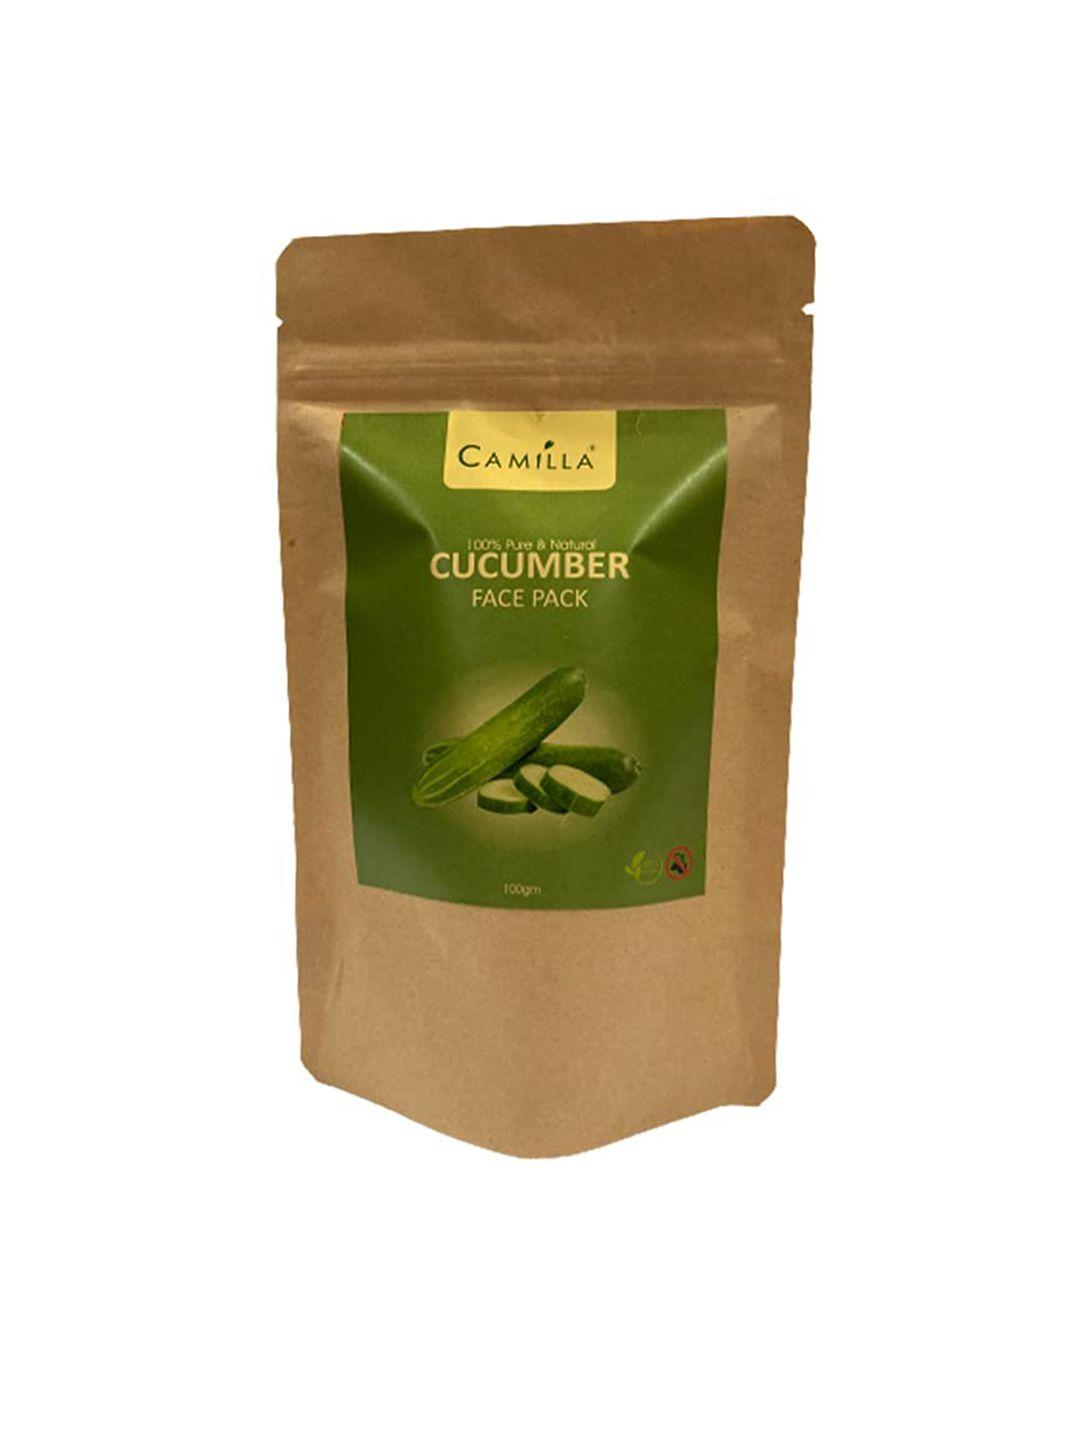 camilla 100% pure & natural cucumber face pack - 100 g